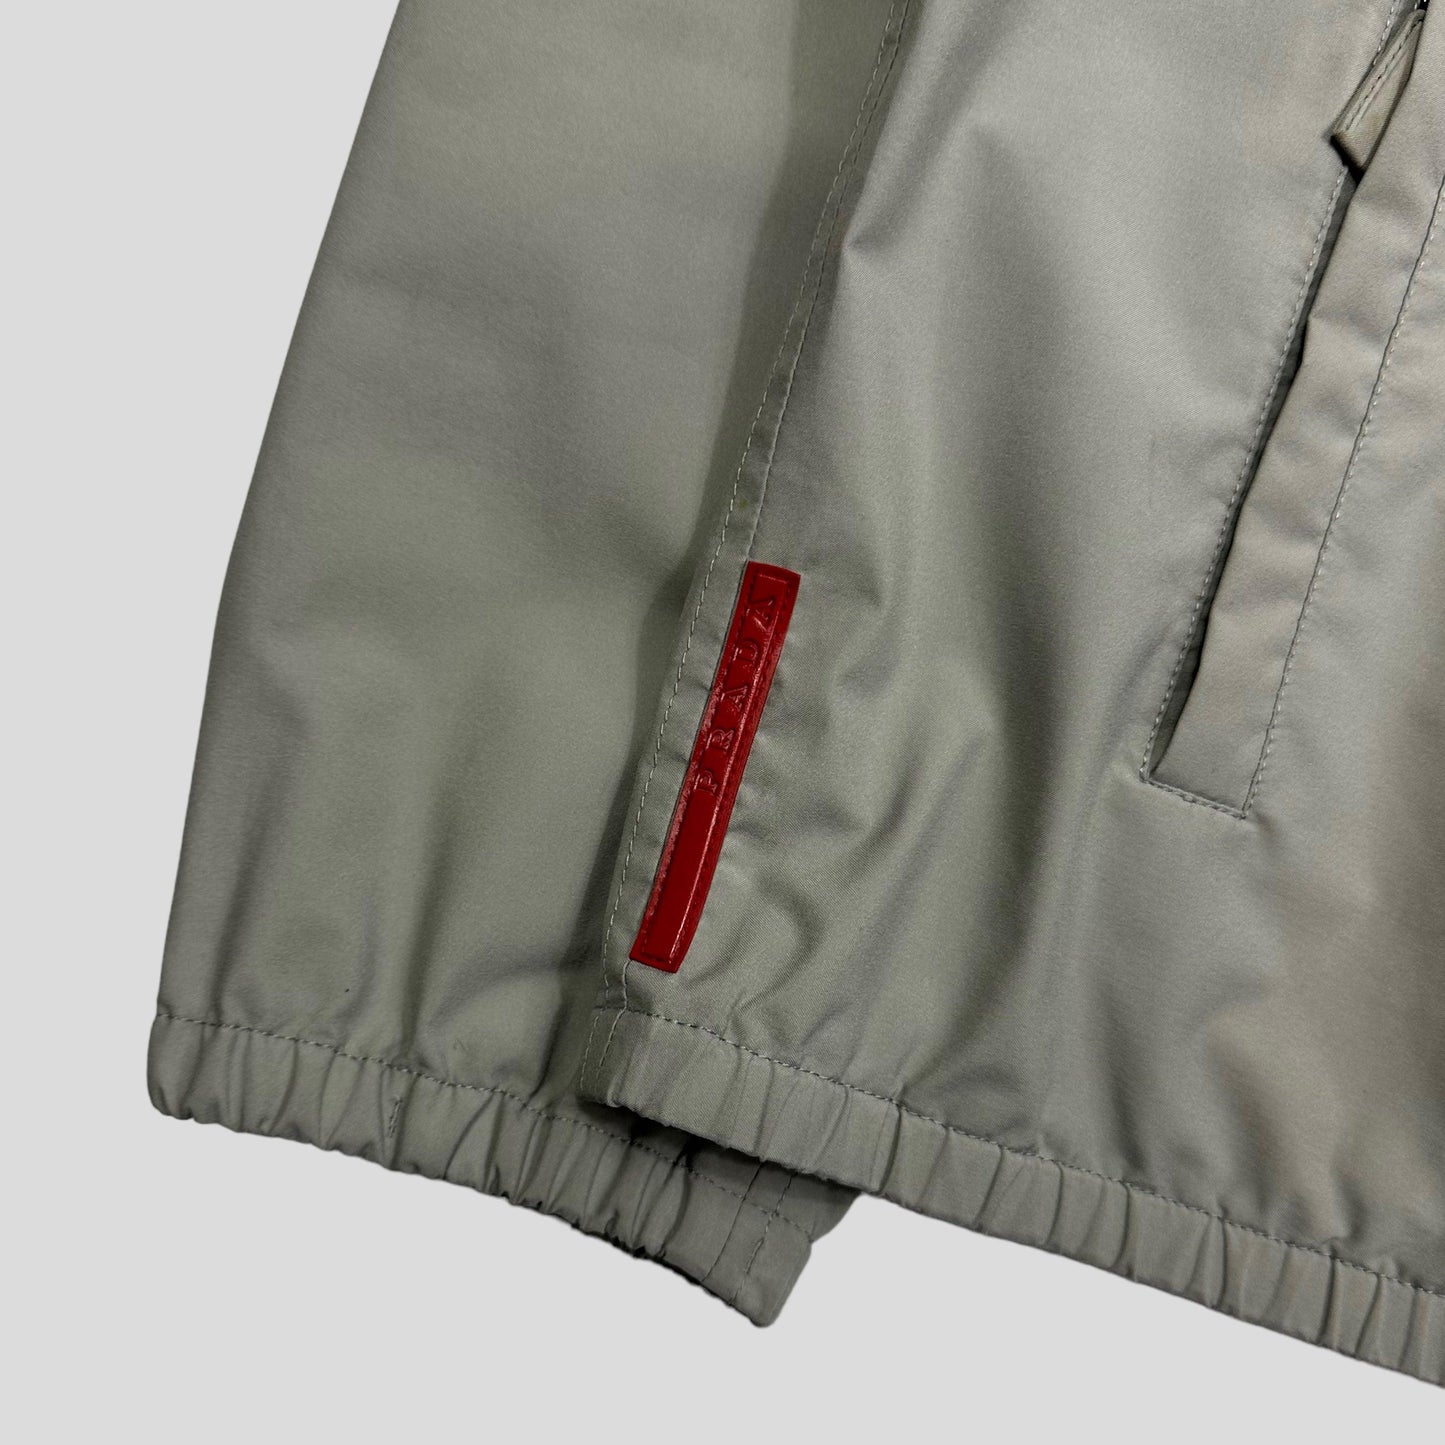 Prada Sport 00’s Goretex Cropped Harrington Jacket - M/L - Known Source